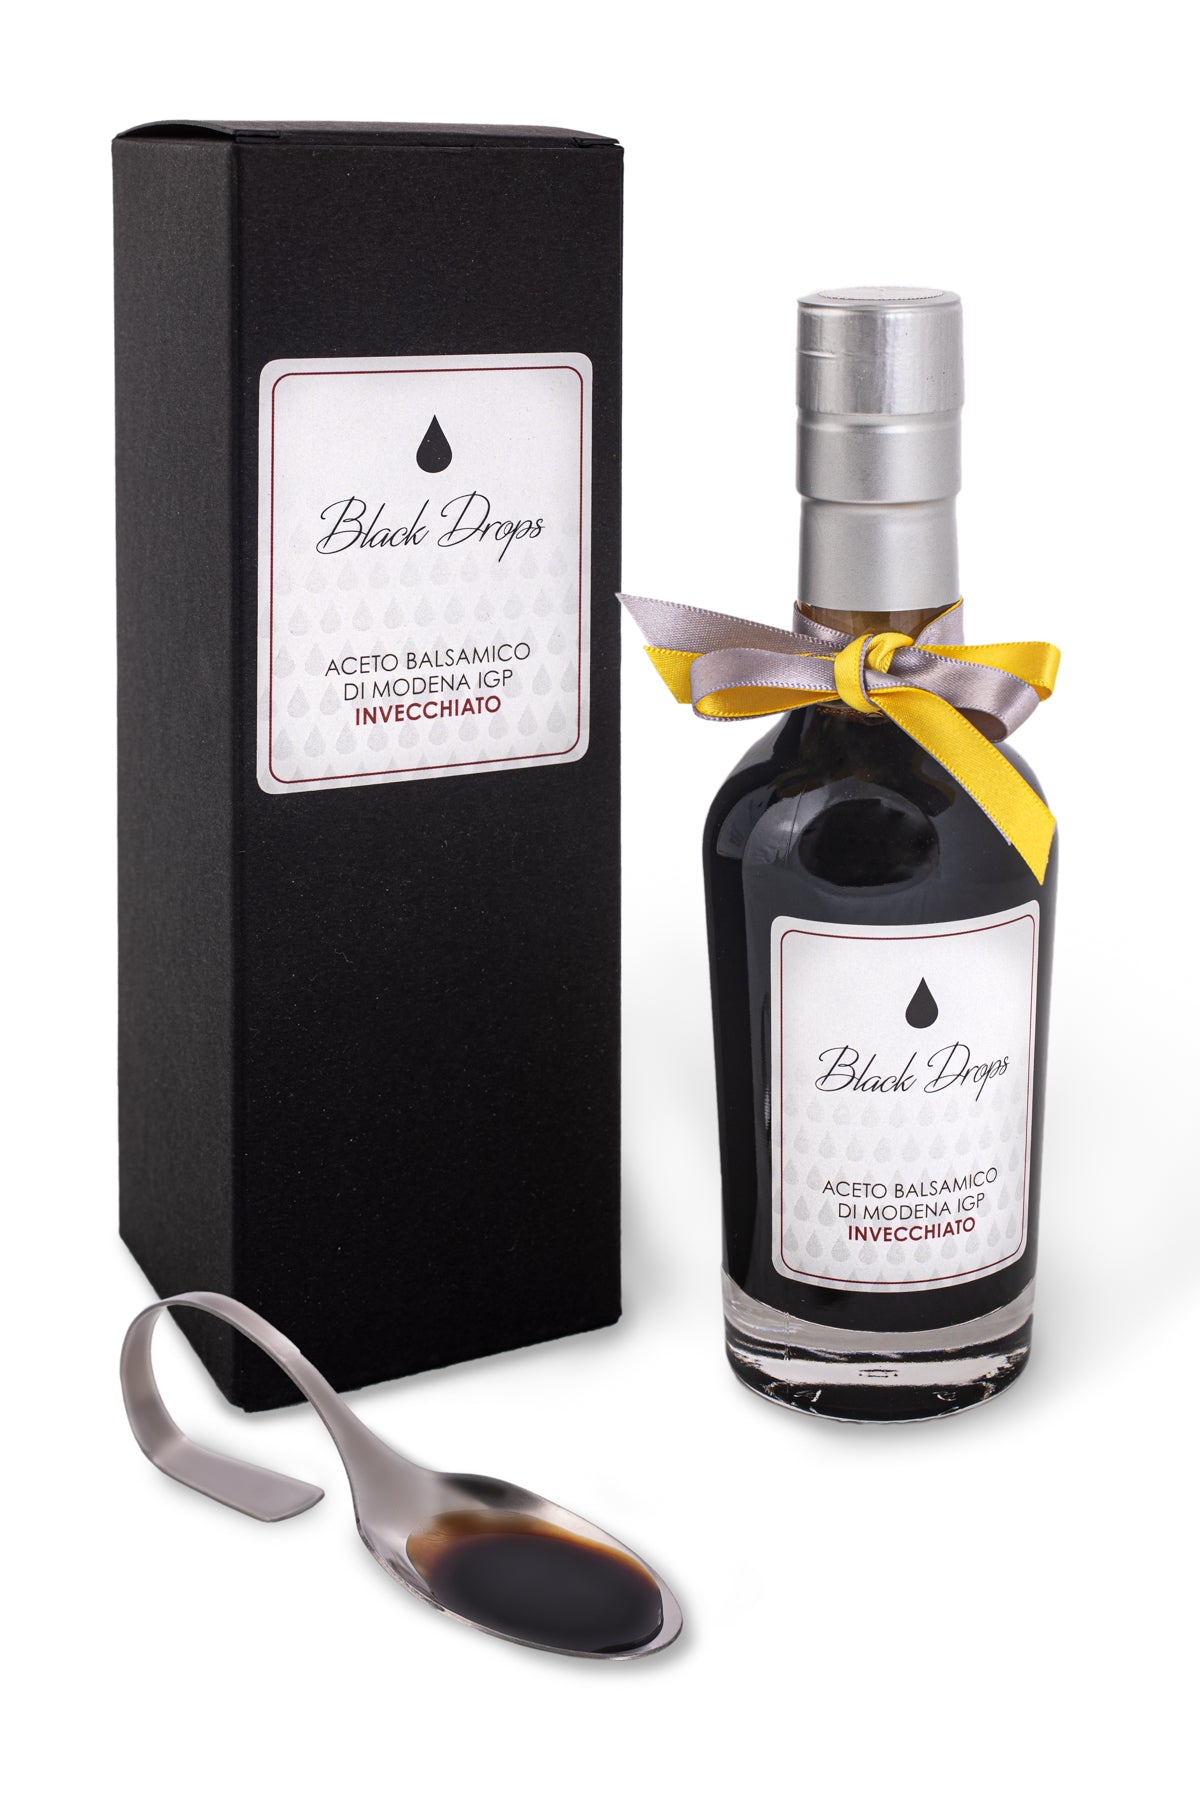 Balsamic Vinegar of Modena P.G.I. 3 years aged 250 ml - Black Drops